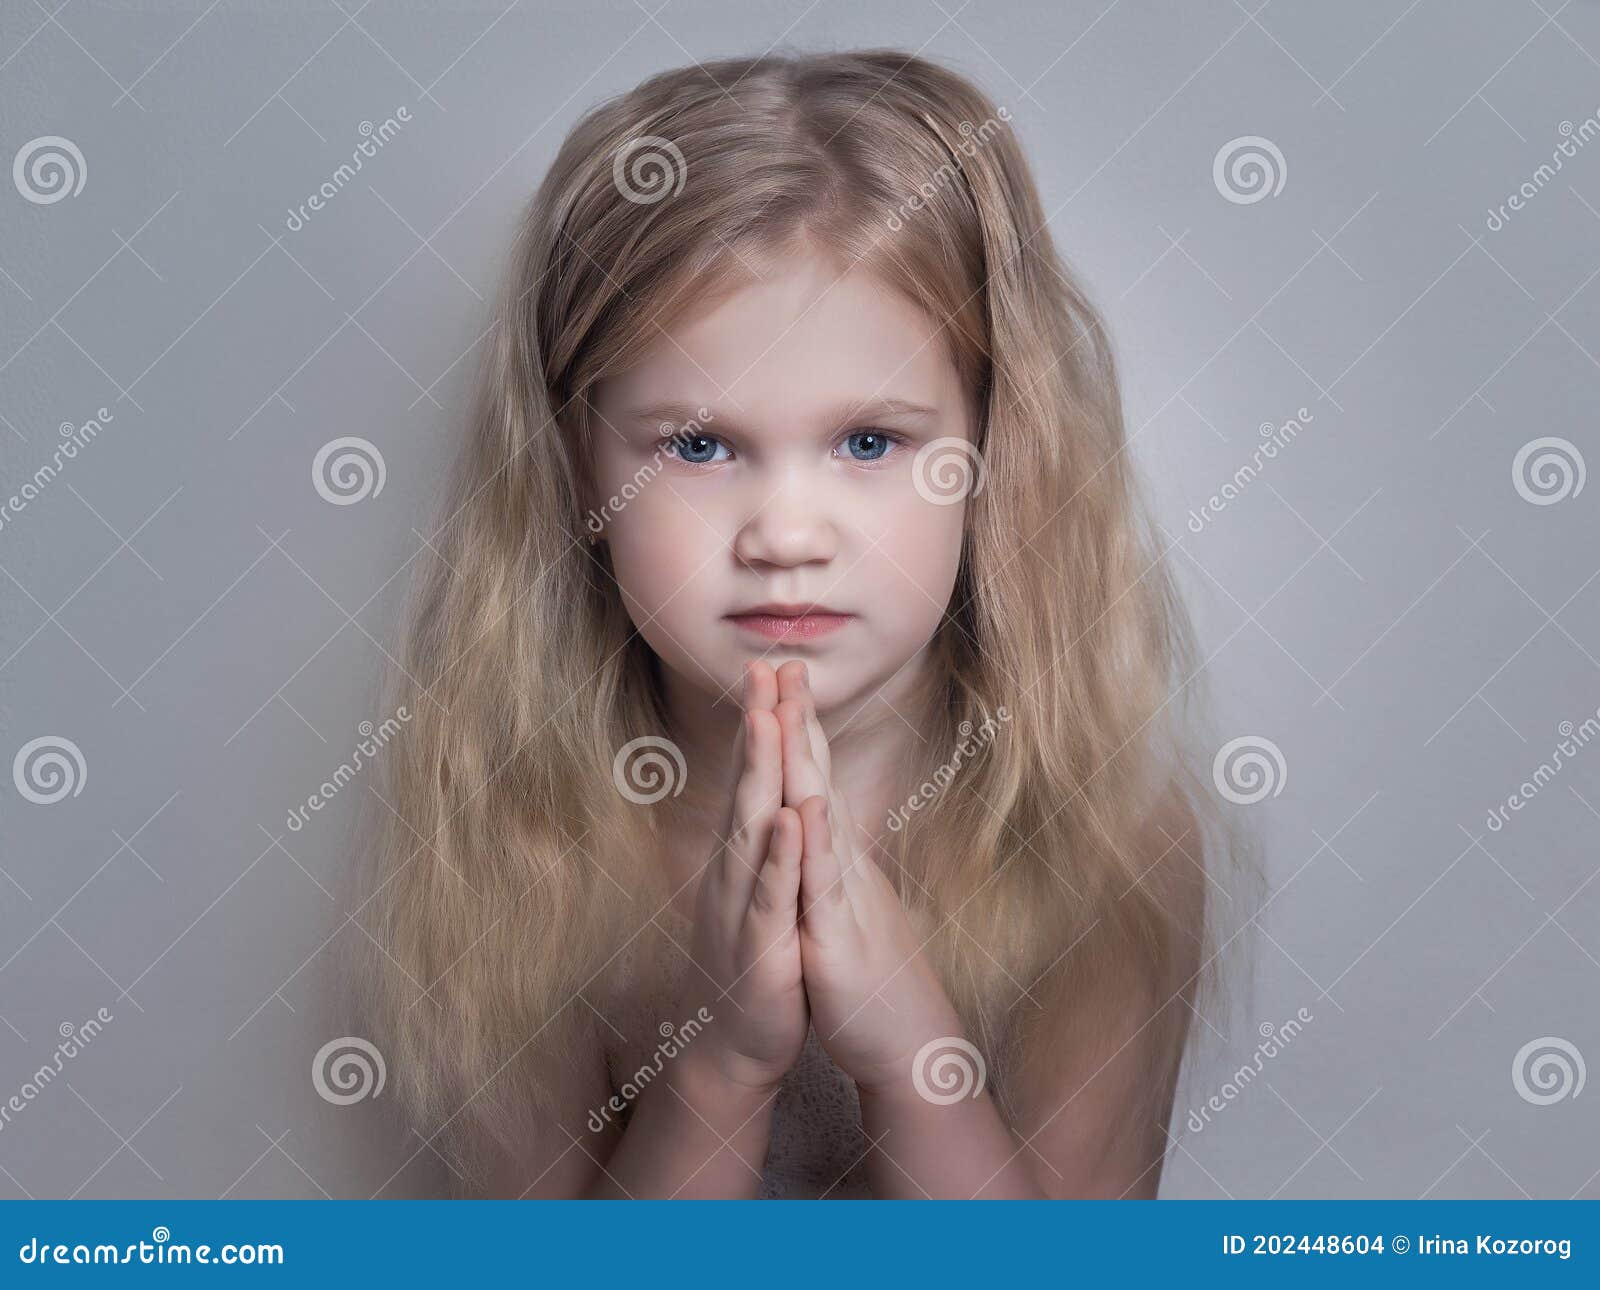 beautiful little girl folded her hands in a prayerful gesture.